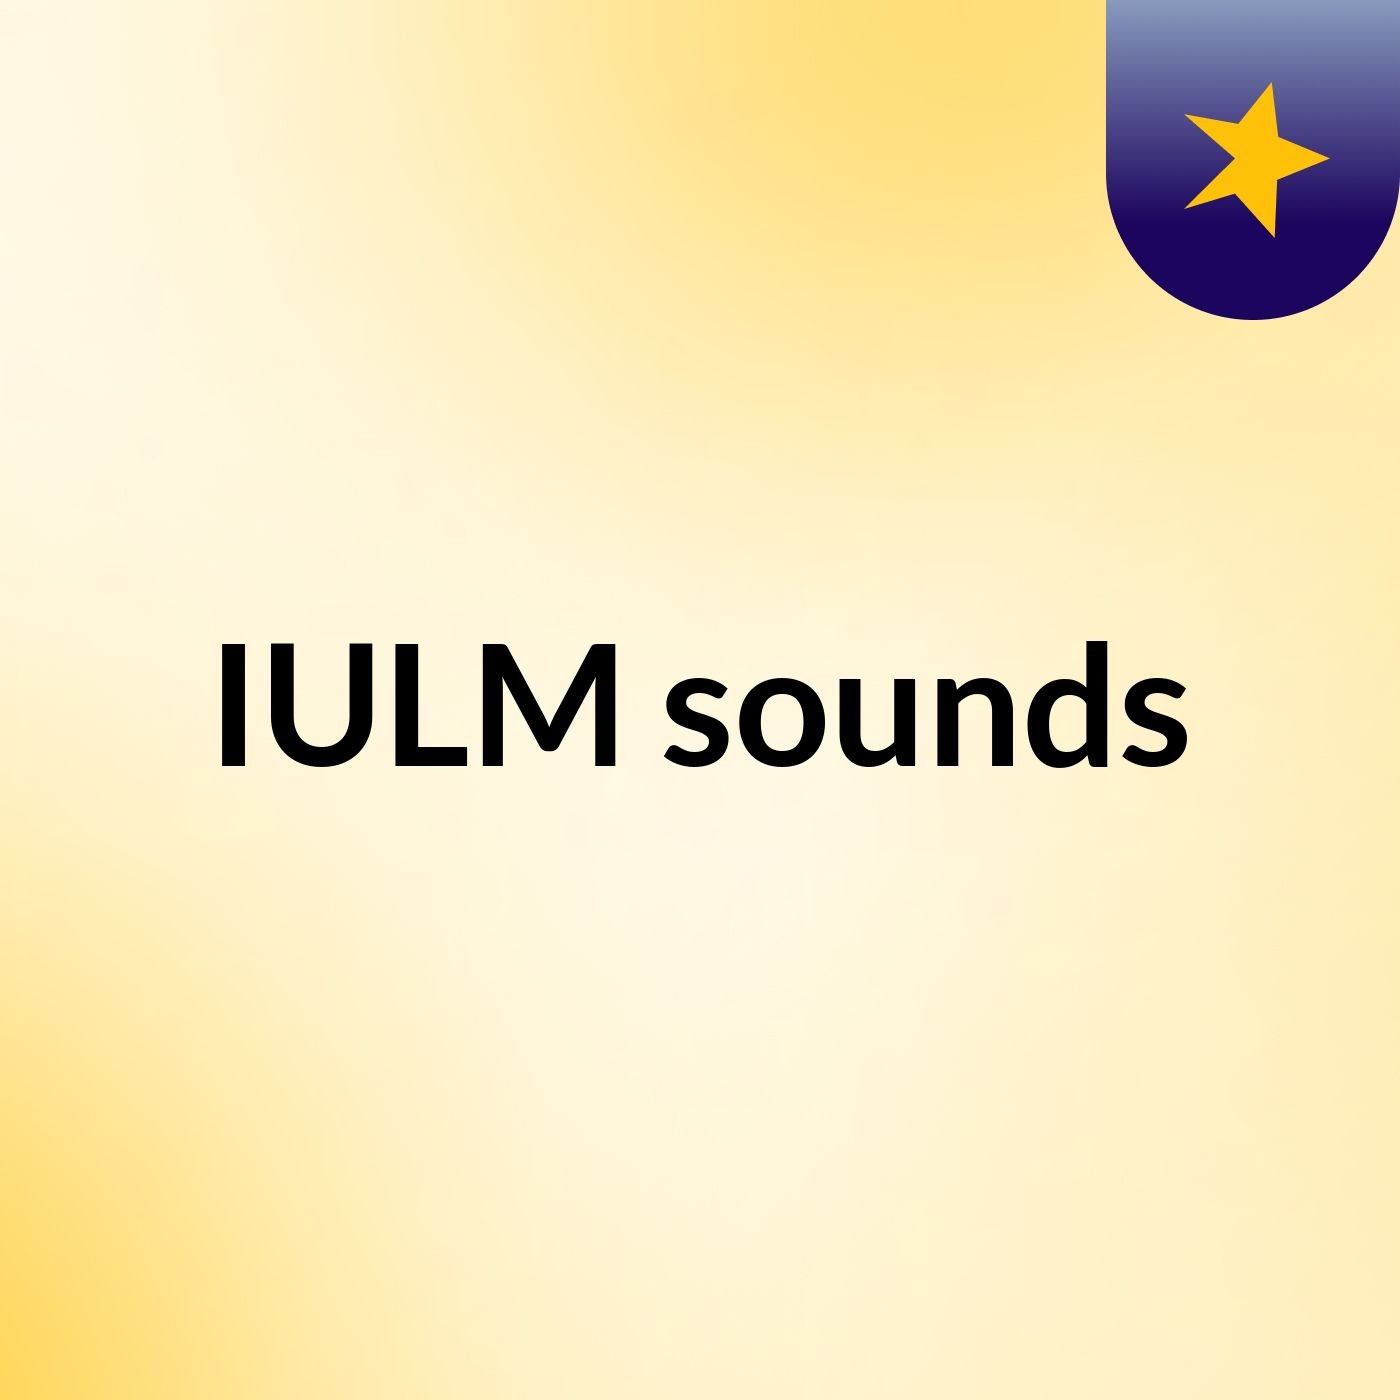 IULM sounds